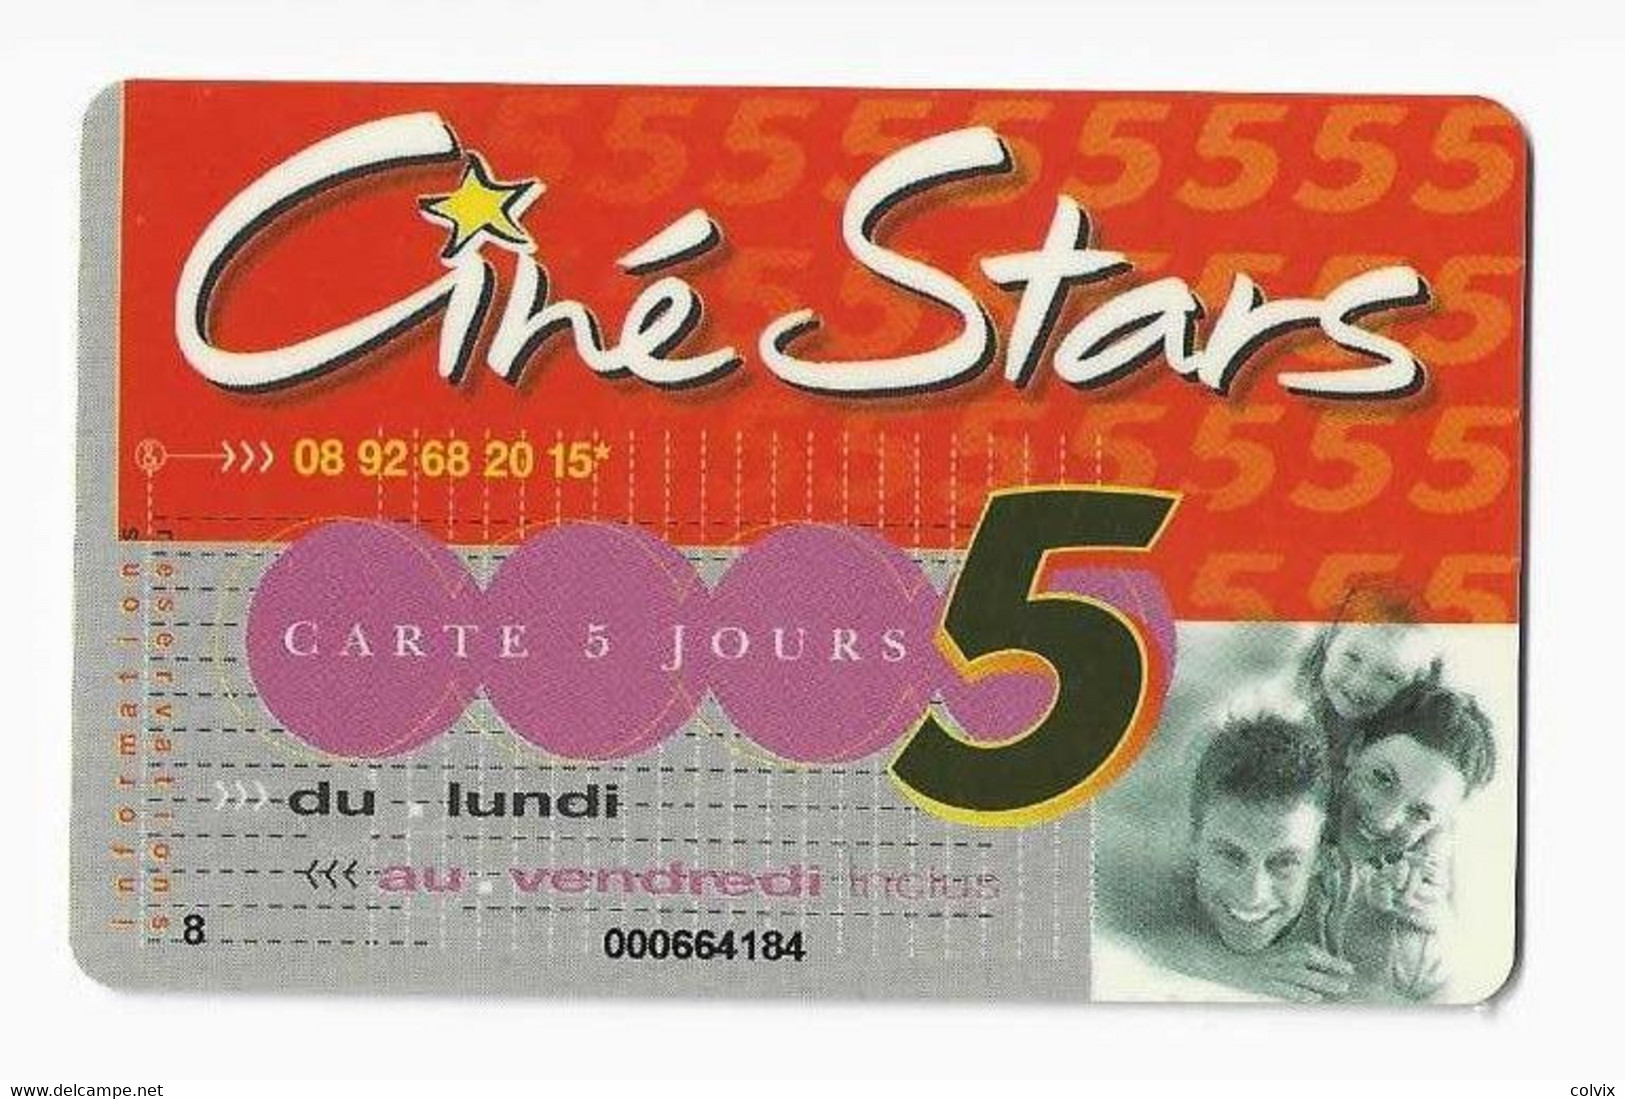 FRANCE CARTE CINEMA CINE STARS 5 JOURS - Biglietti Cinema